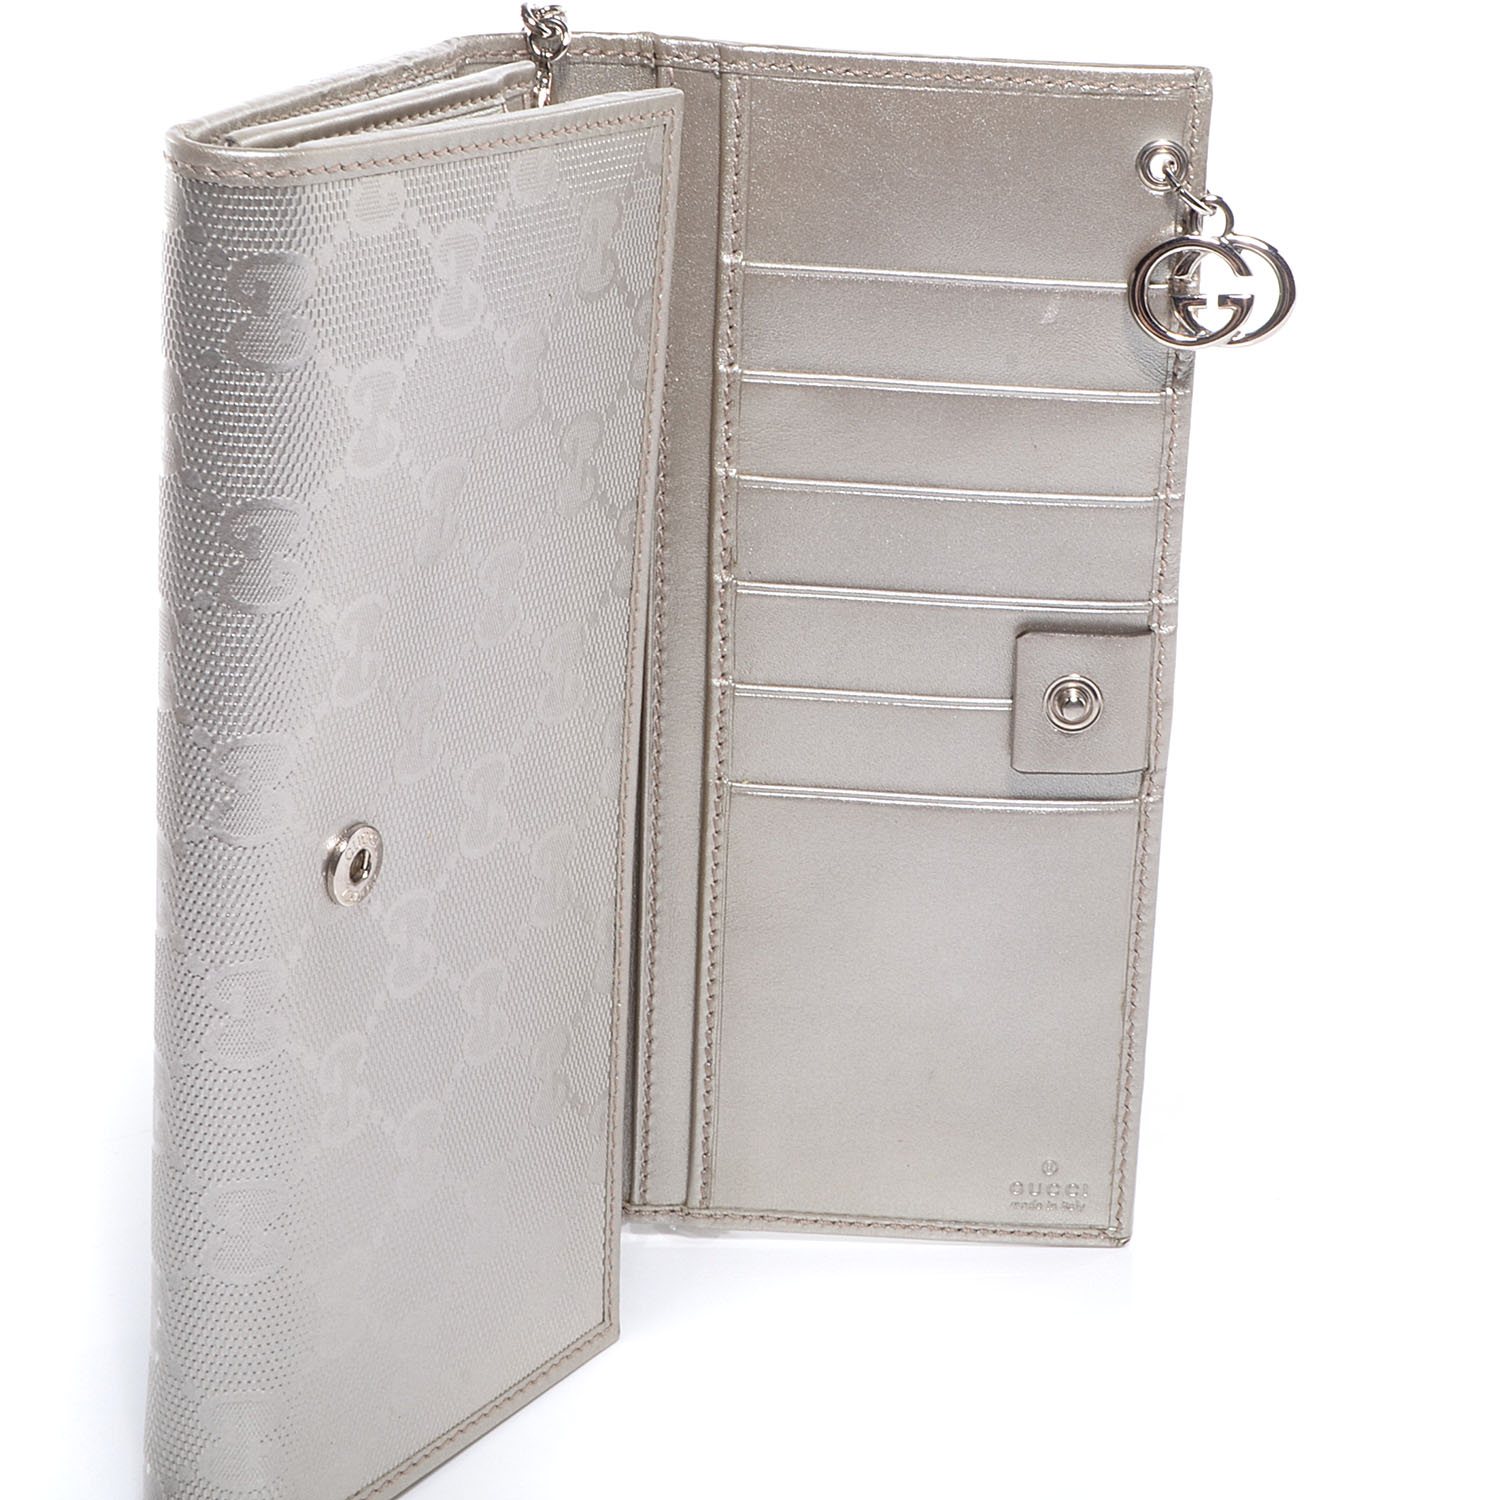 gucci silver wallet, OFF 71%,www 